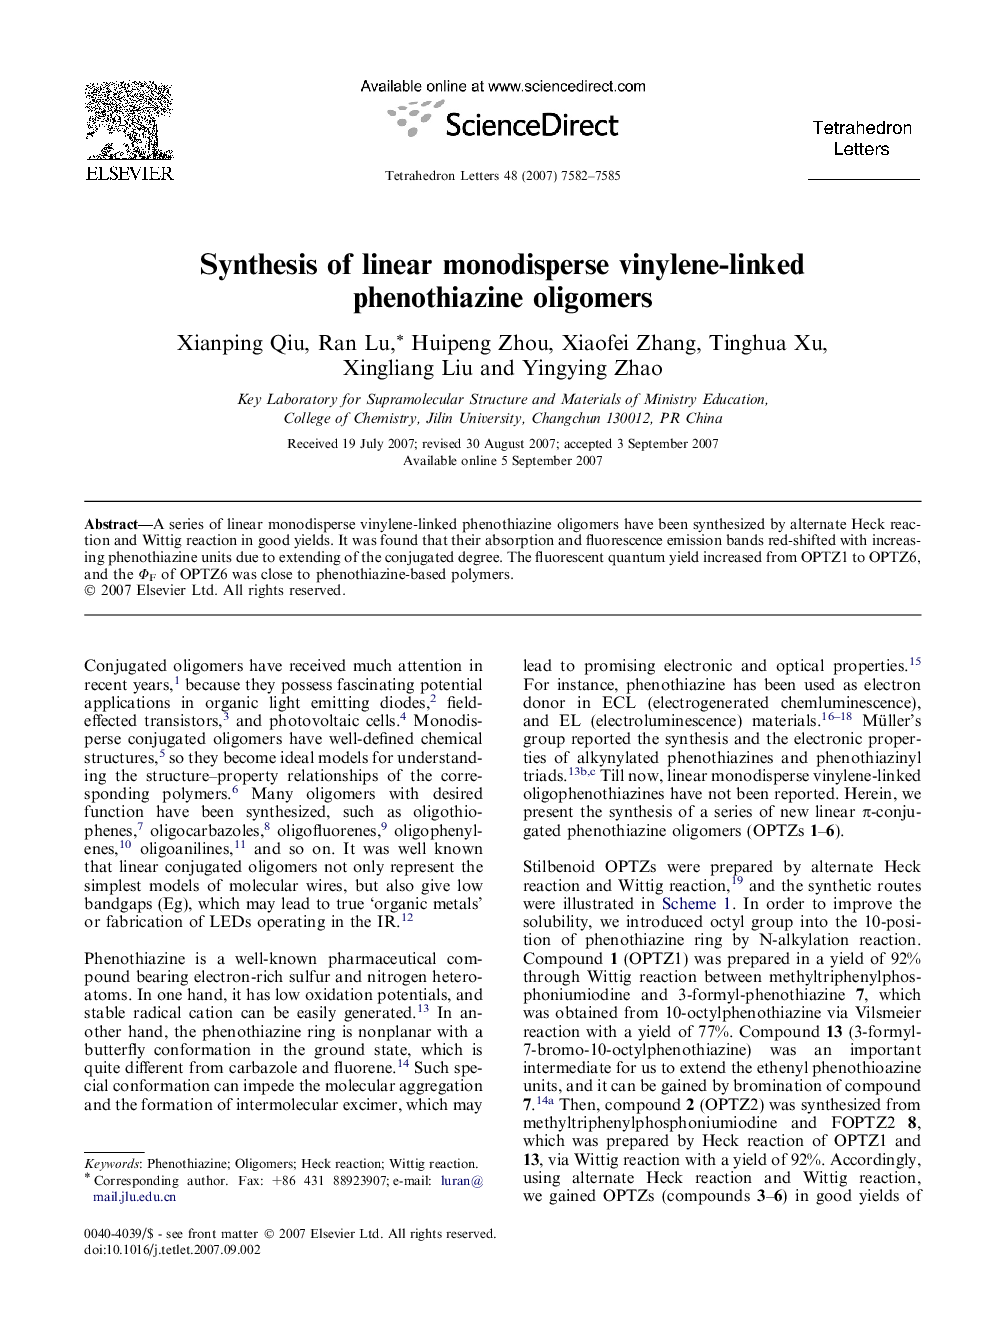 Synthesis of linear monodisperse vinylene-linked phenothiazine oligomers